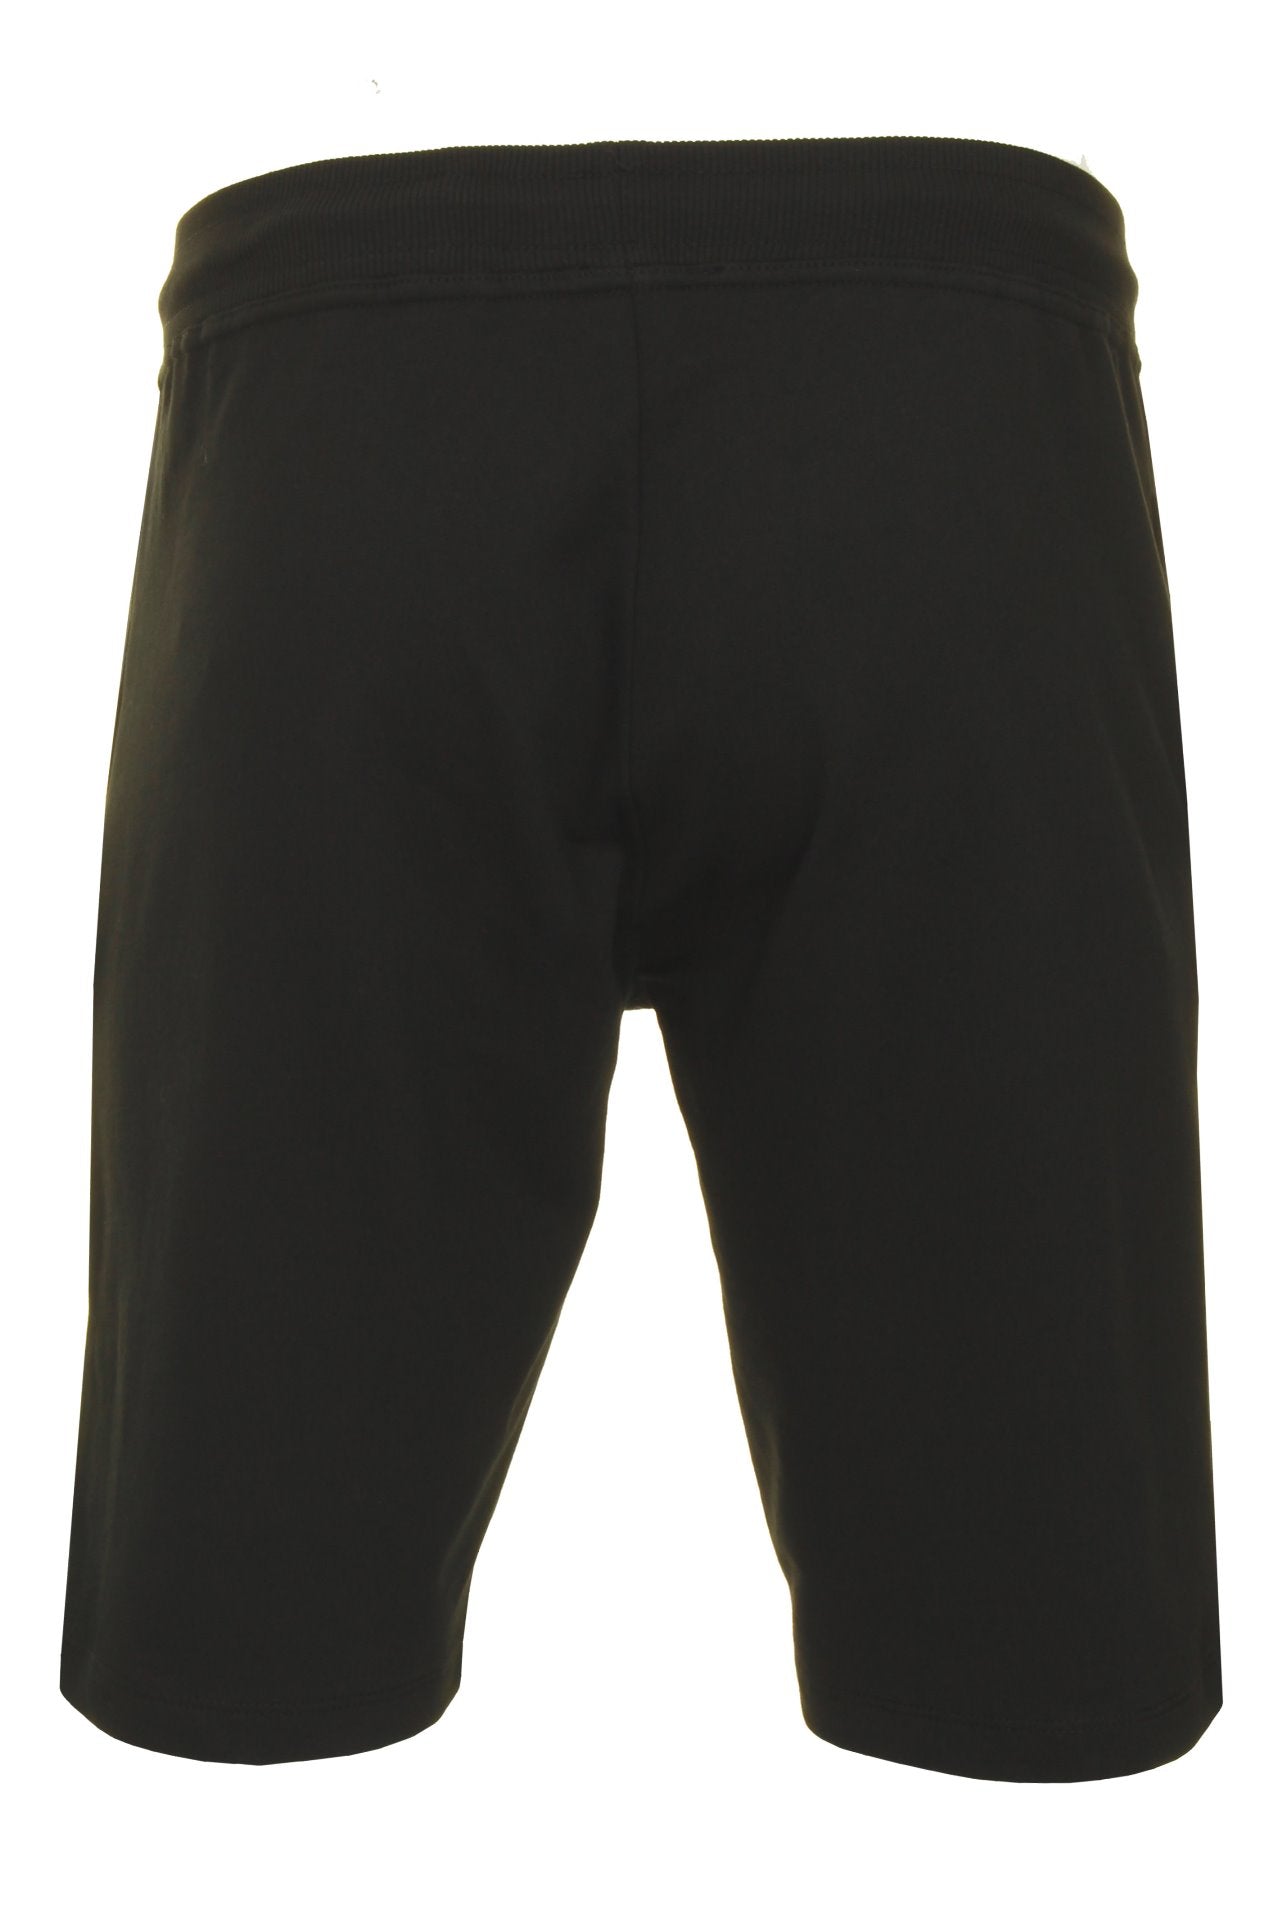 Xact Men's Cotton Gym/ Sweat Jogger Shorts-3